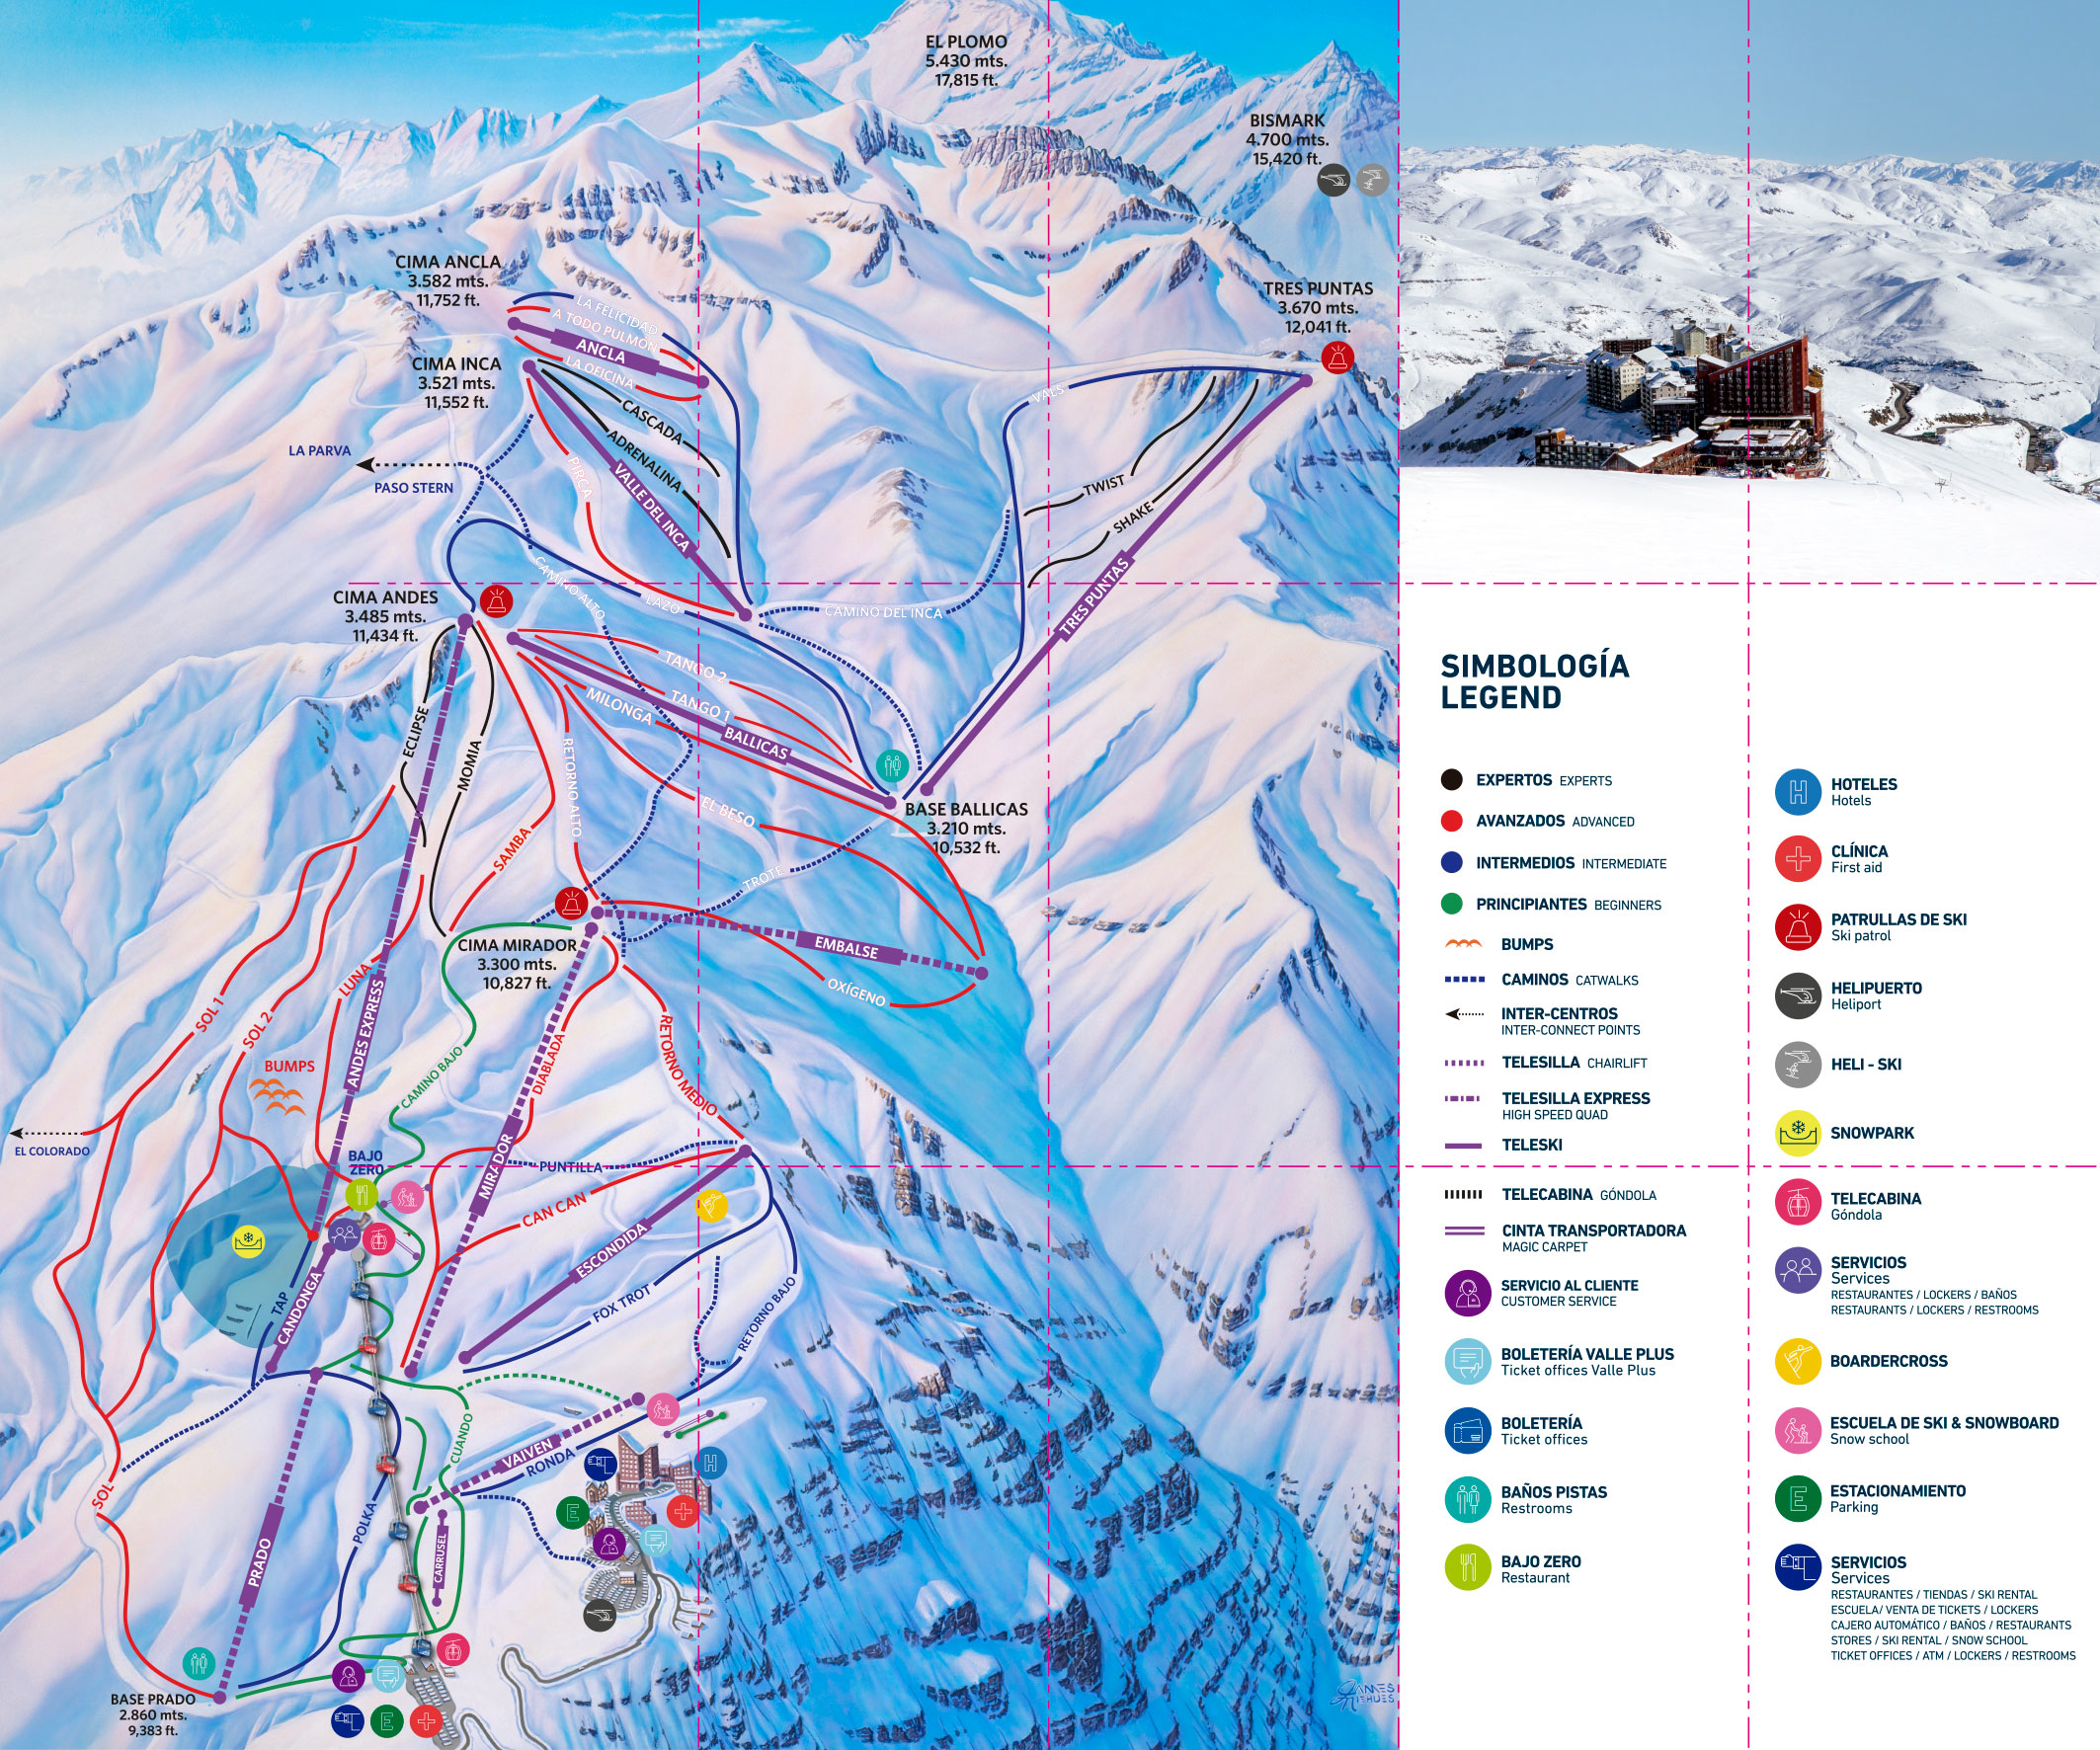 Valle Nevado Ski Resort trail map